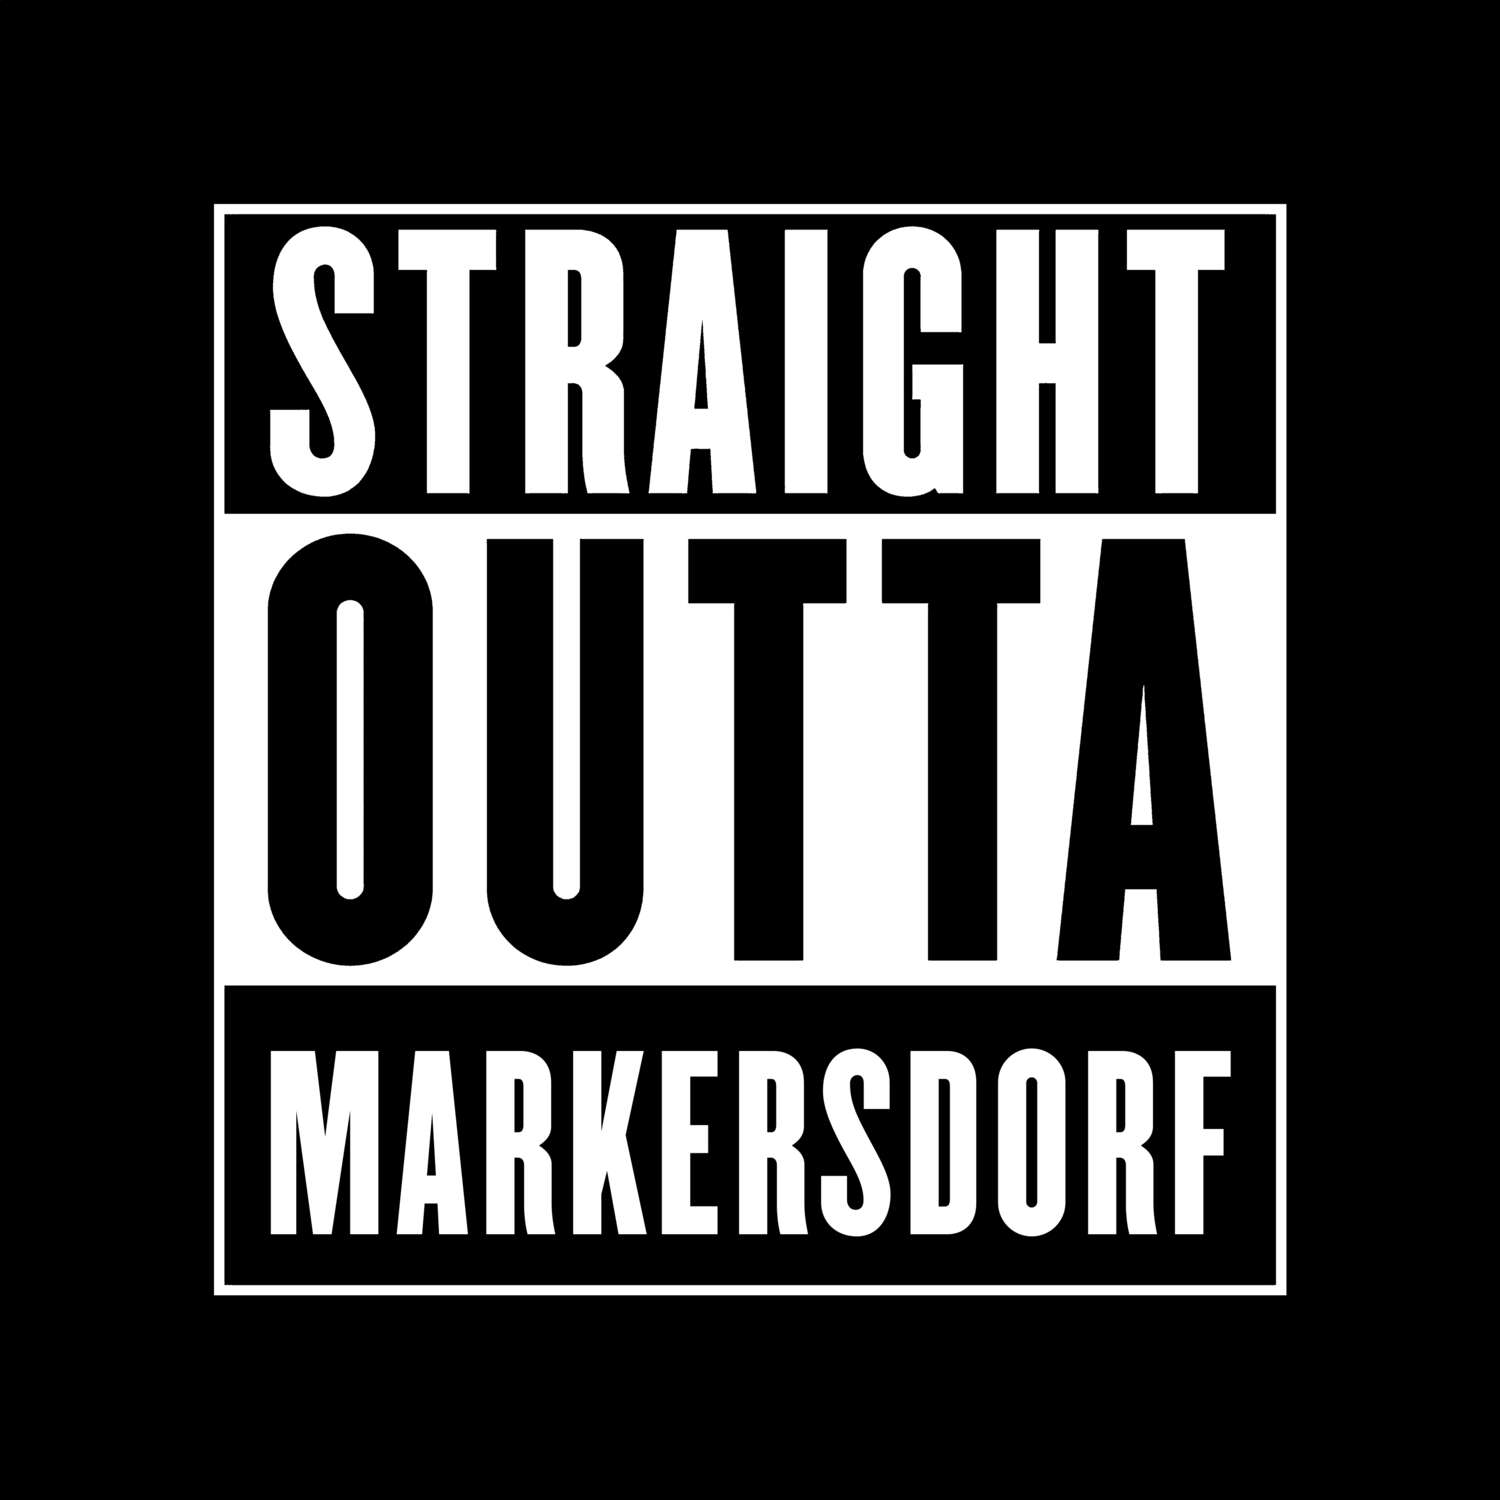 Markersdorf T-Shirt »Straight Outta«